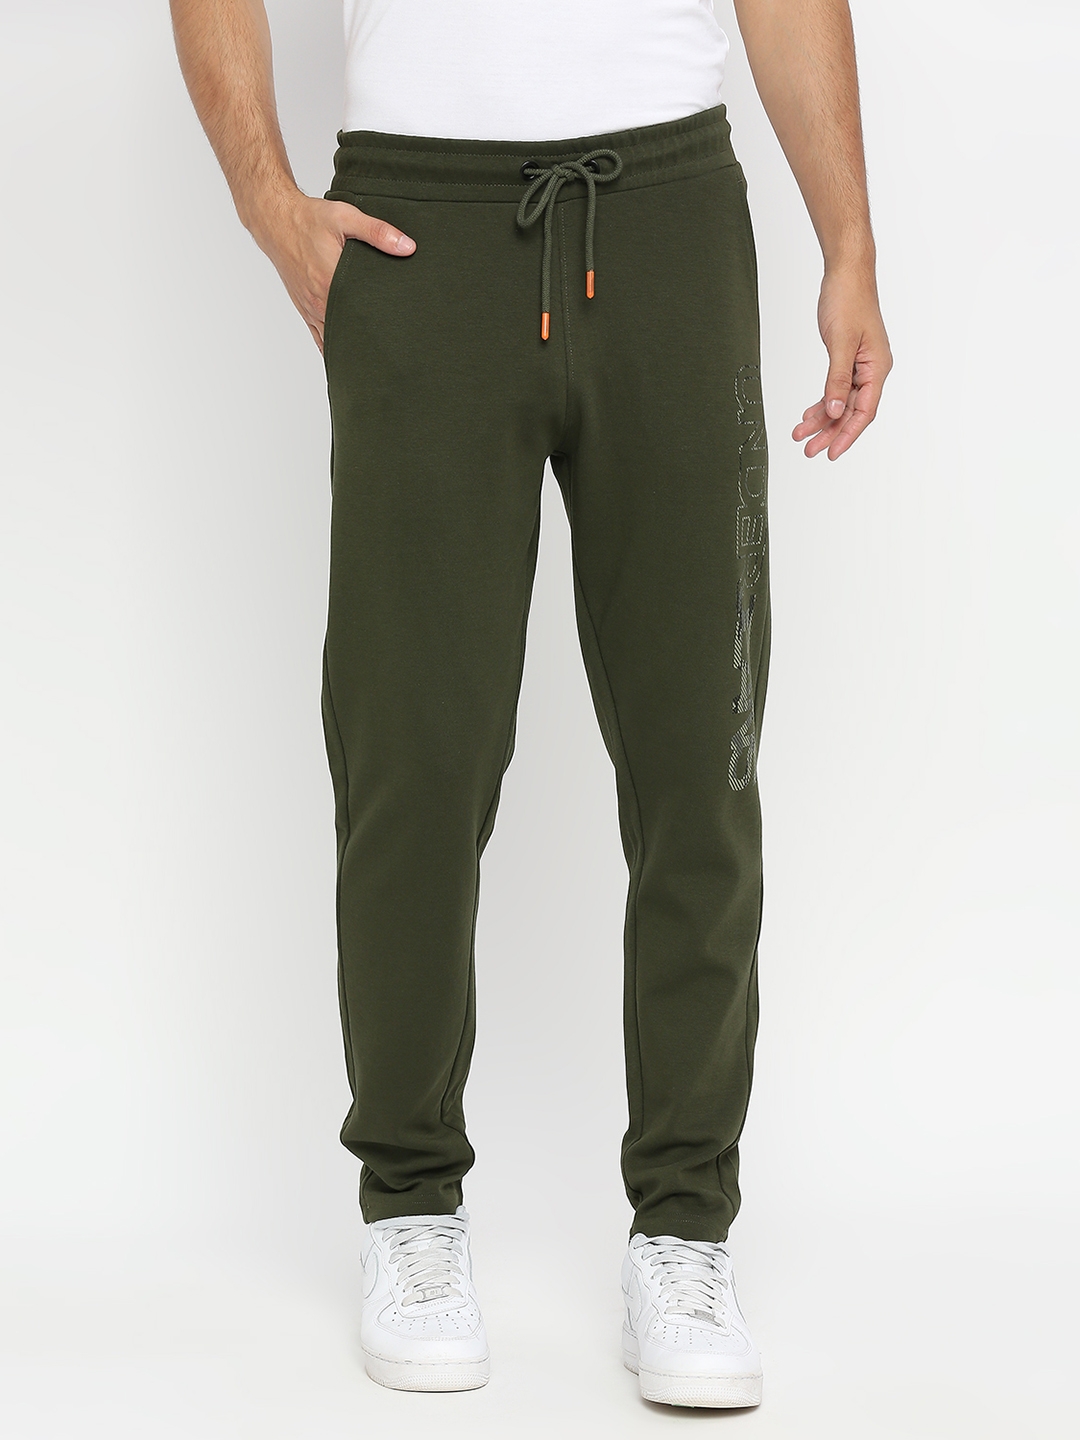 Spykar | Underjeans by Spykar Men Knitted Rifle Green Cotton Pyjama